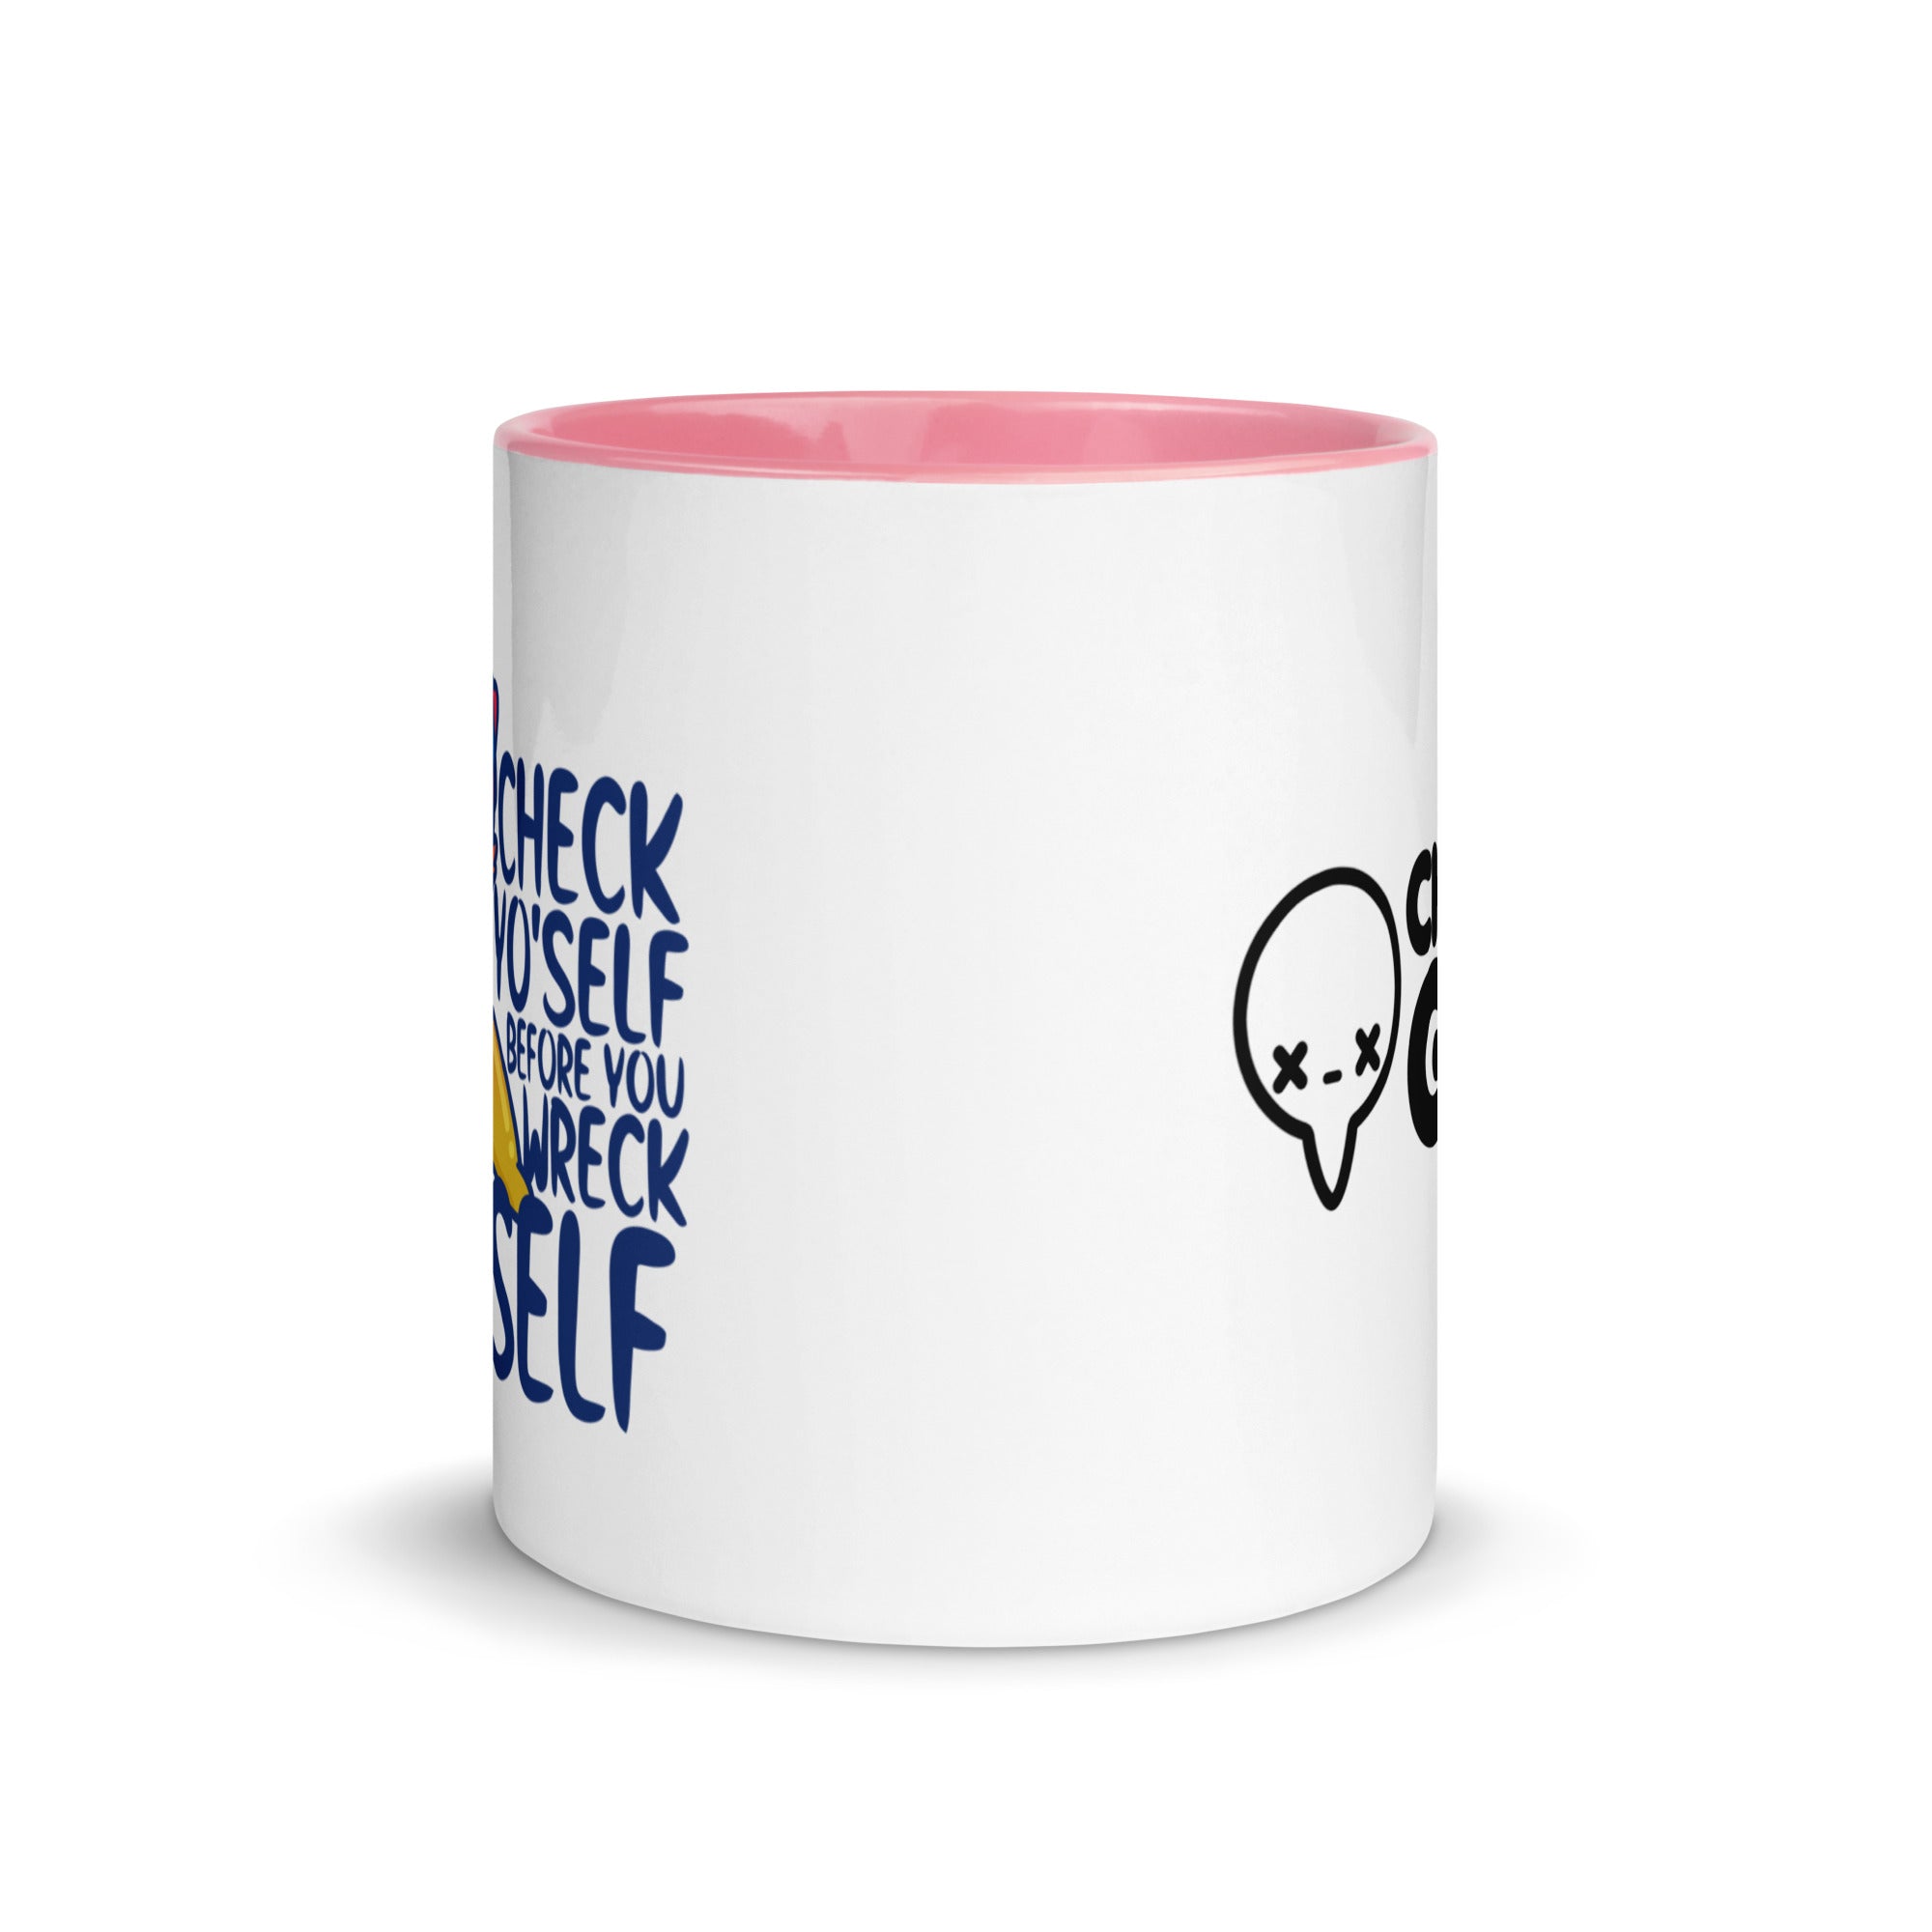 CHECK YOSELF - Mug With Color Inside - ChubbleGumLLC